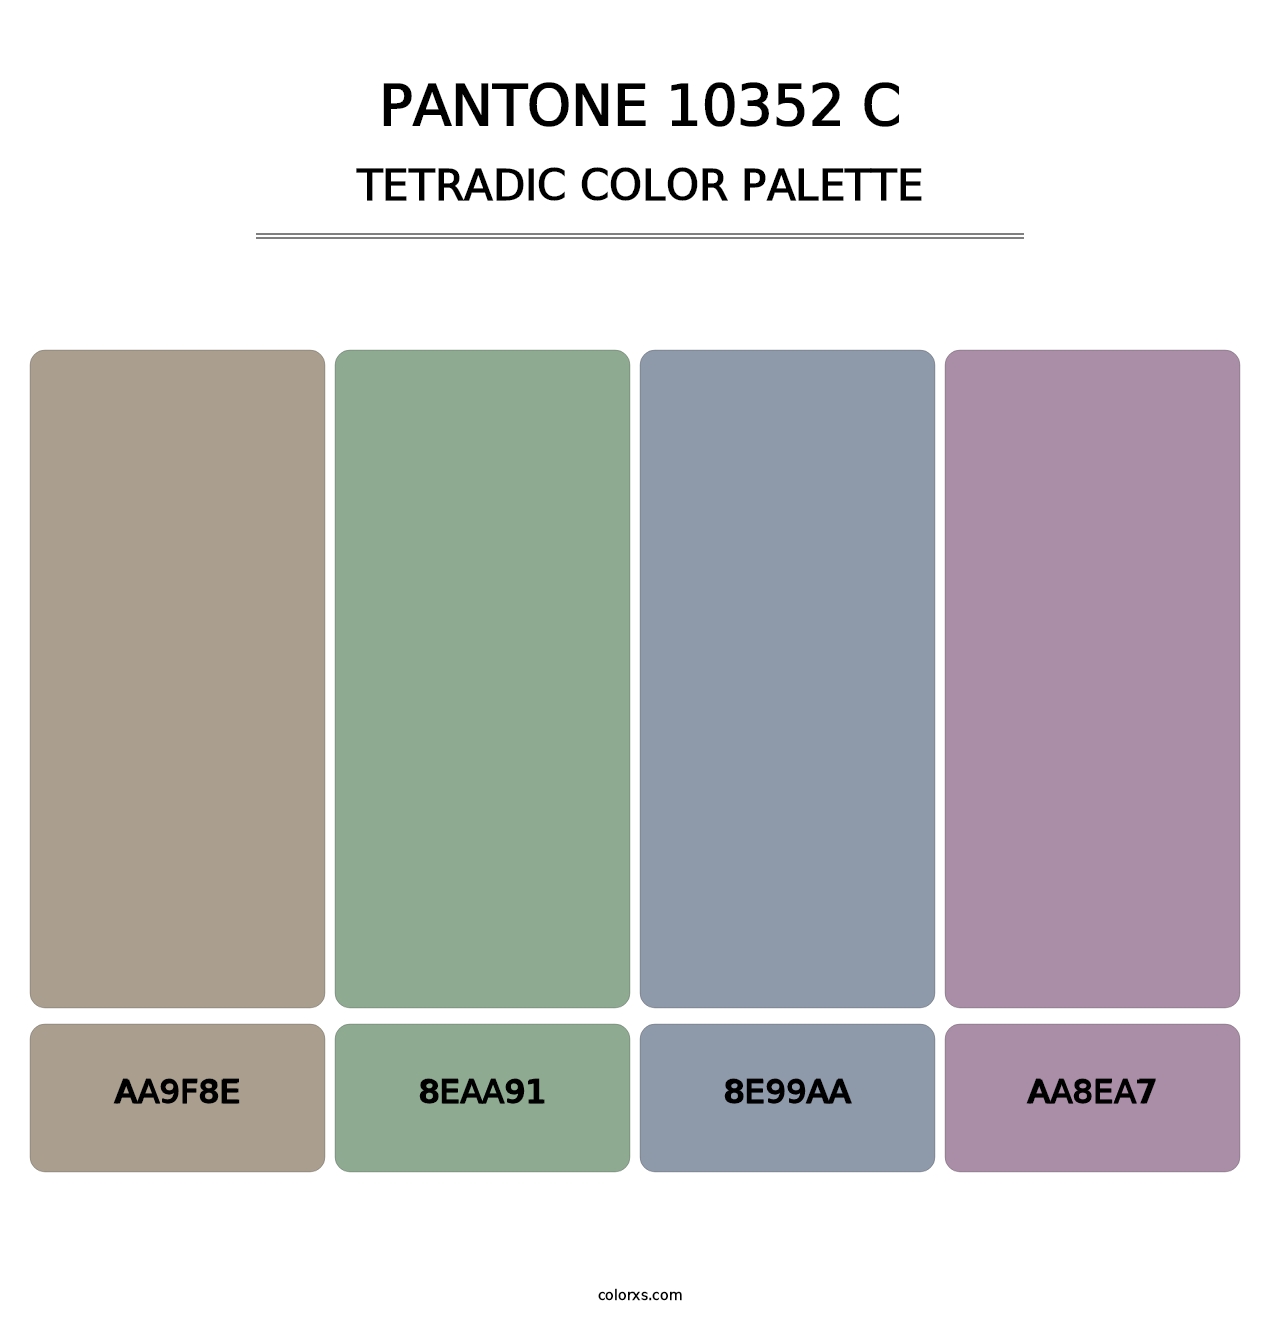 PANTONE 10352 C - Tetradic Color Palette